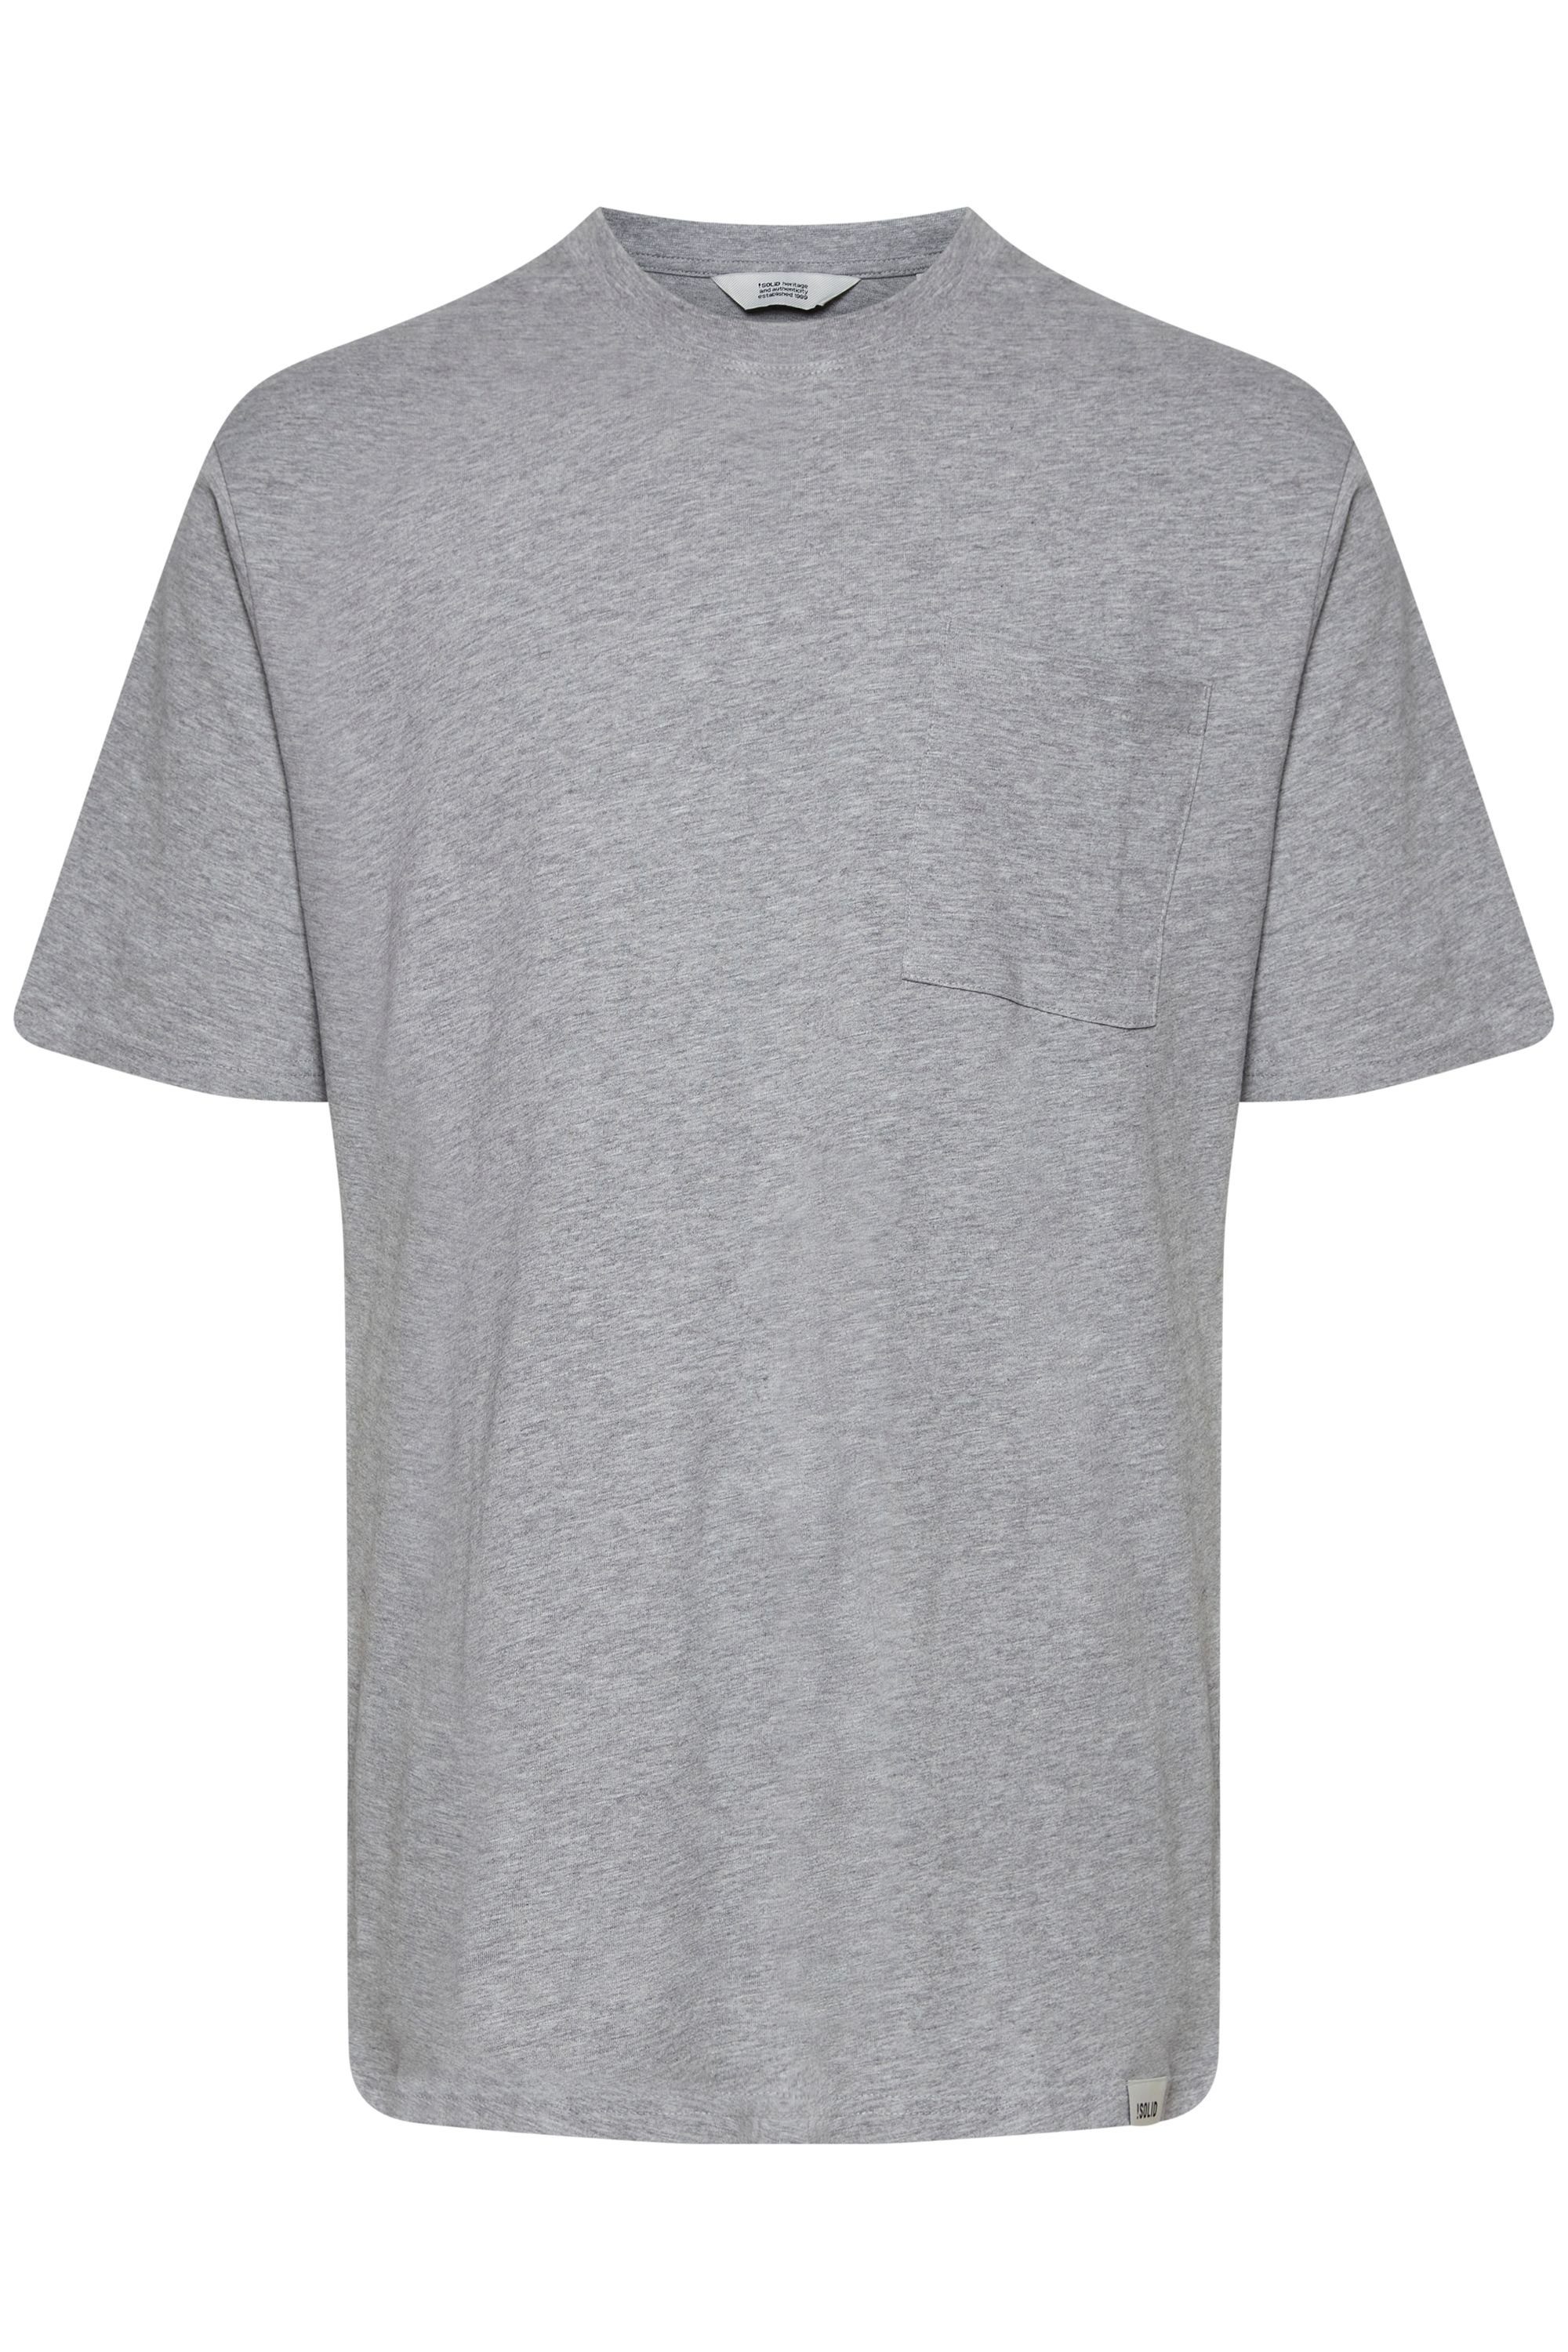 21107372 Grey SDDurant Melange !Solid Light S T-Shirt (1541011)